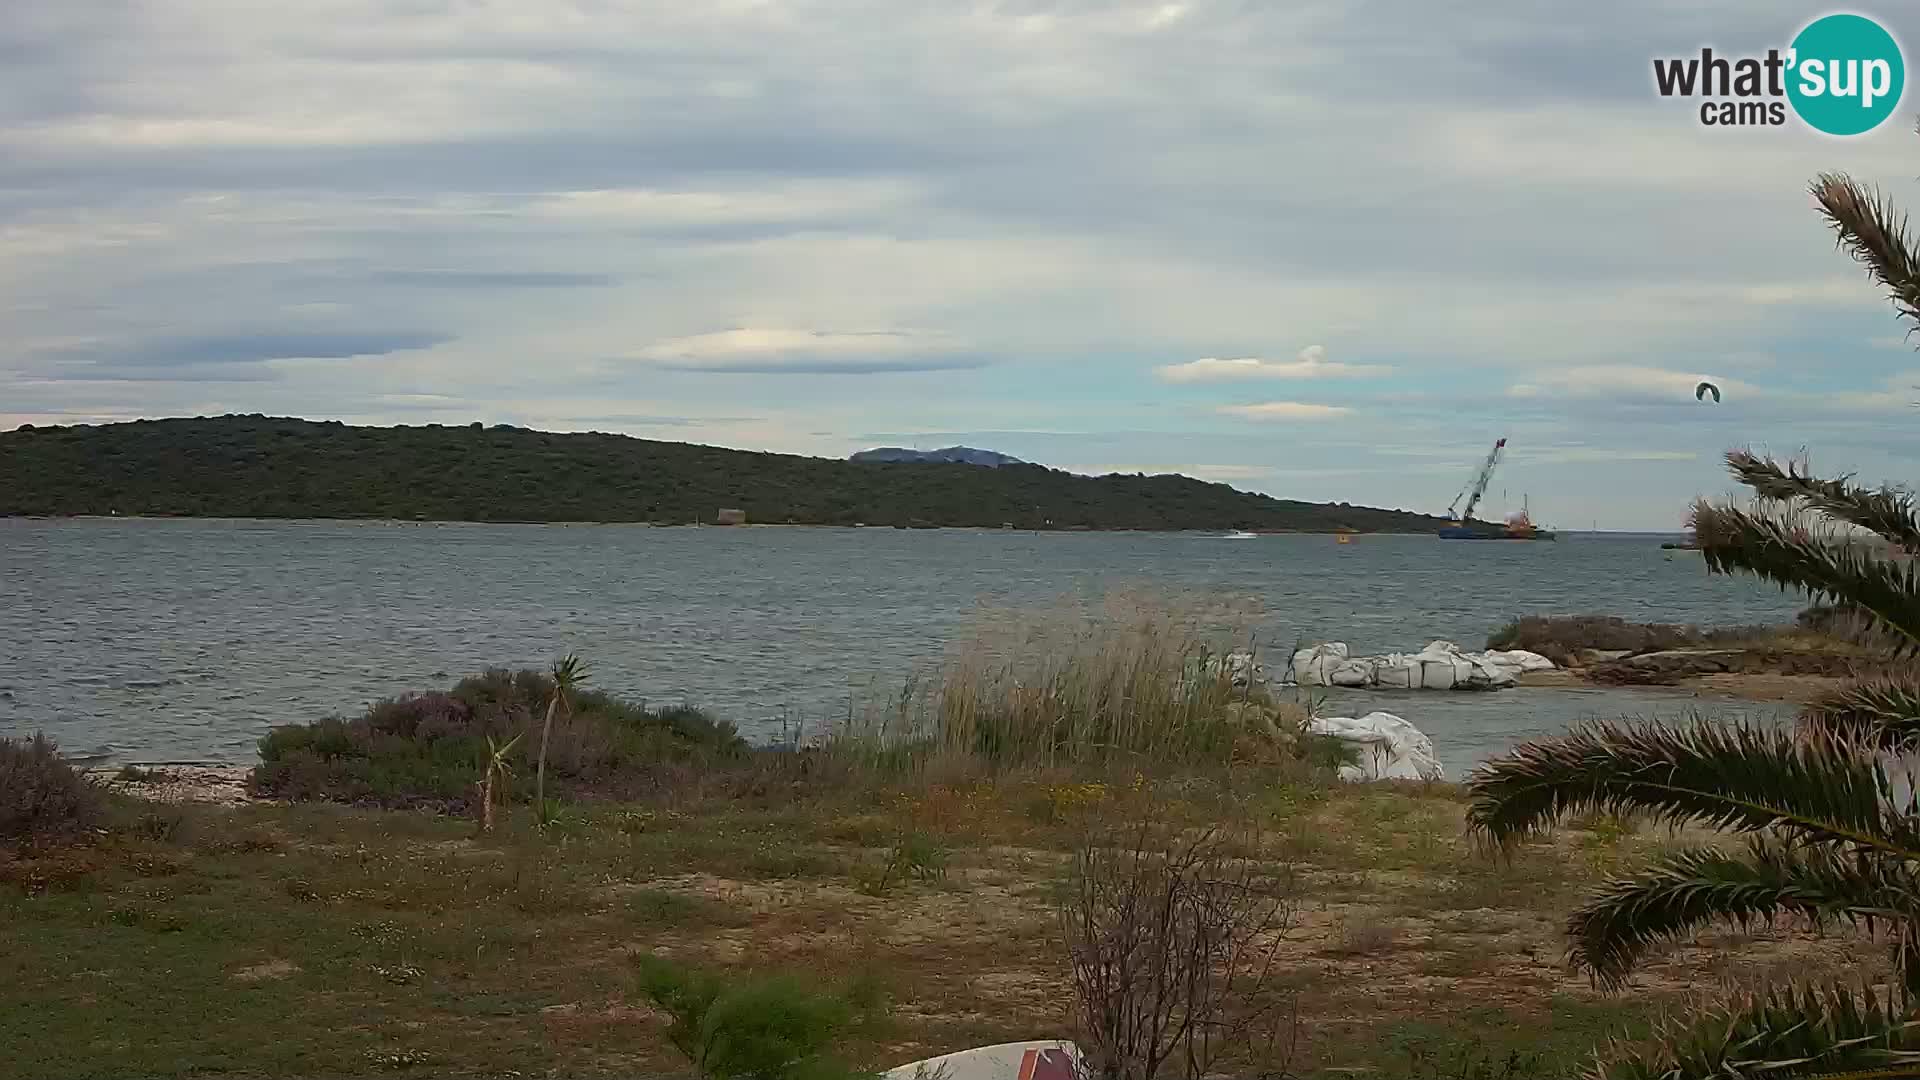 Webcam Olbia port – entrance to the port of Olbia